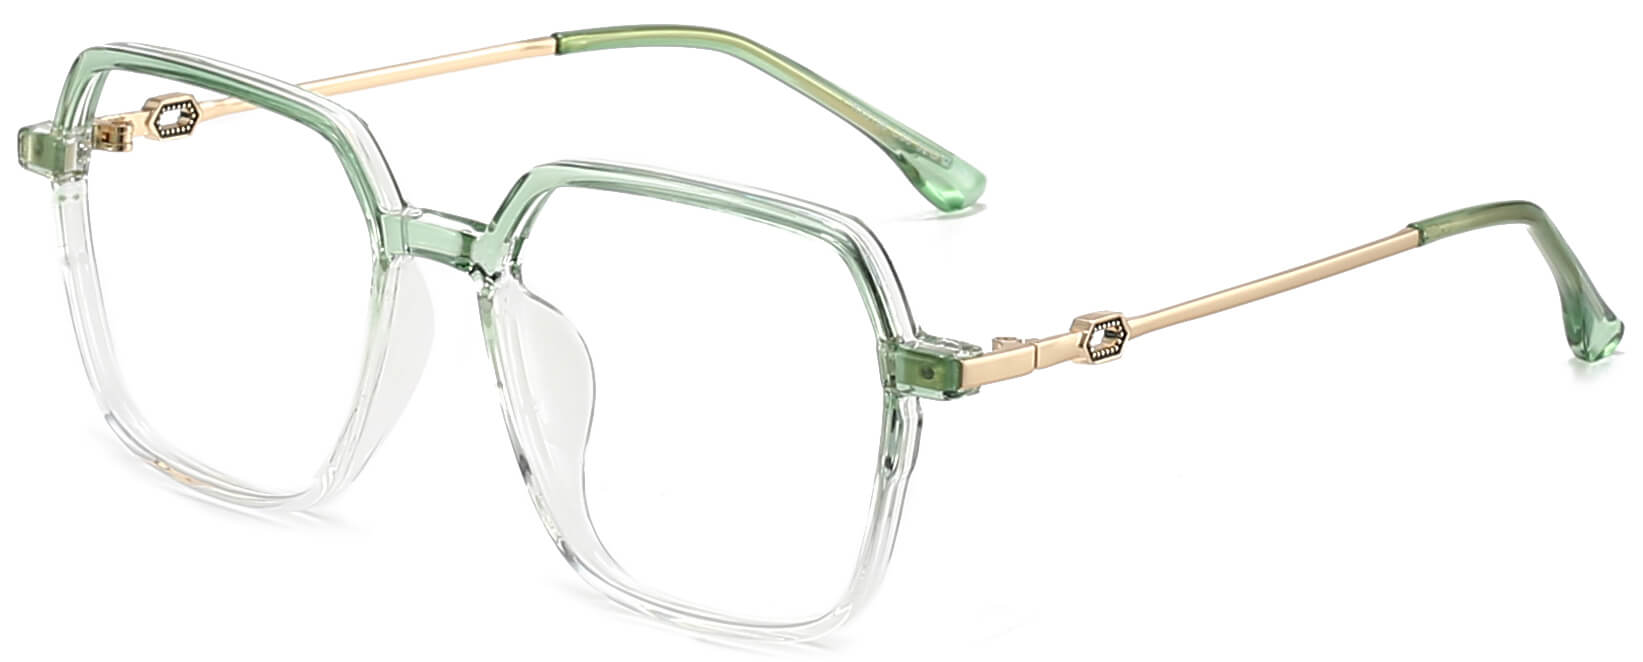 Greta Geometric Green Eyeglasses from ANRRI, angle view